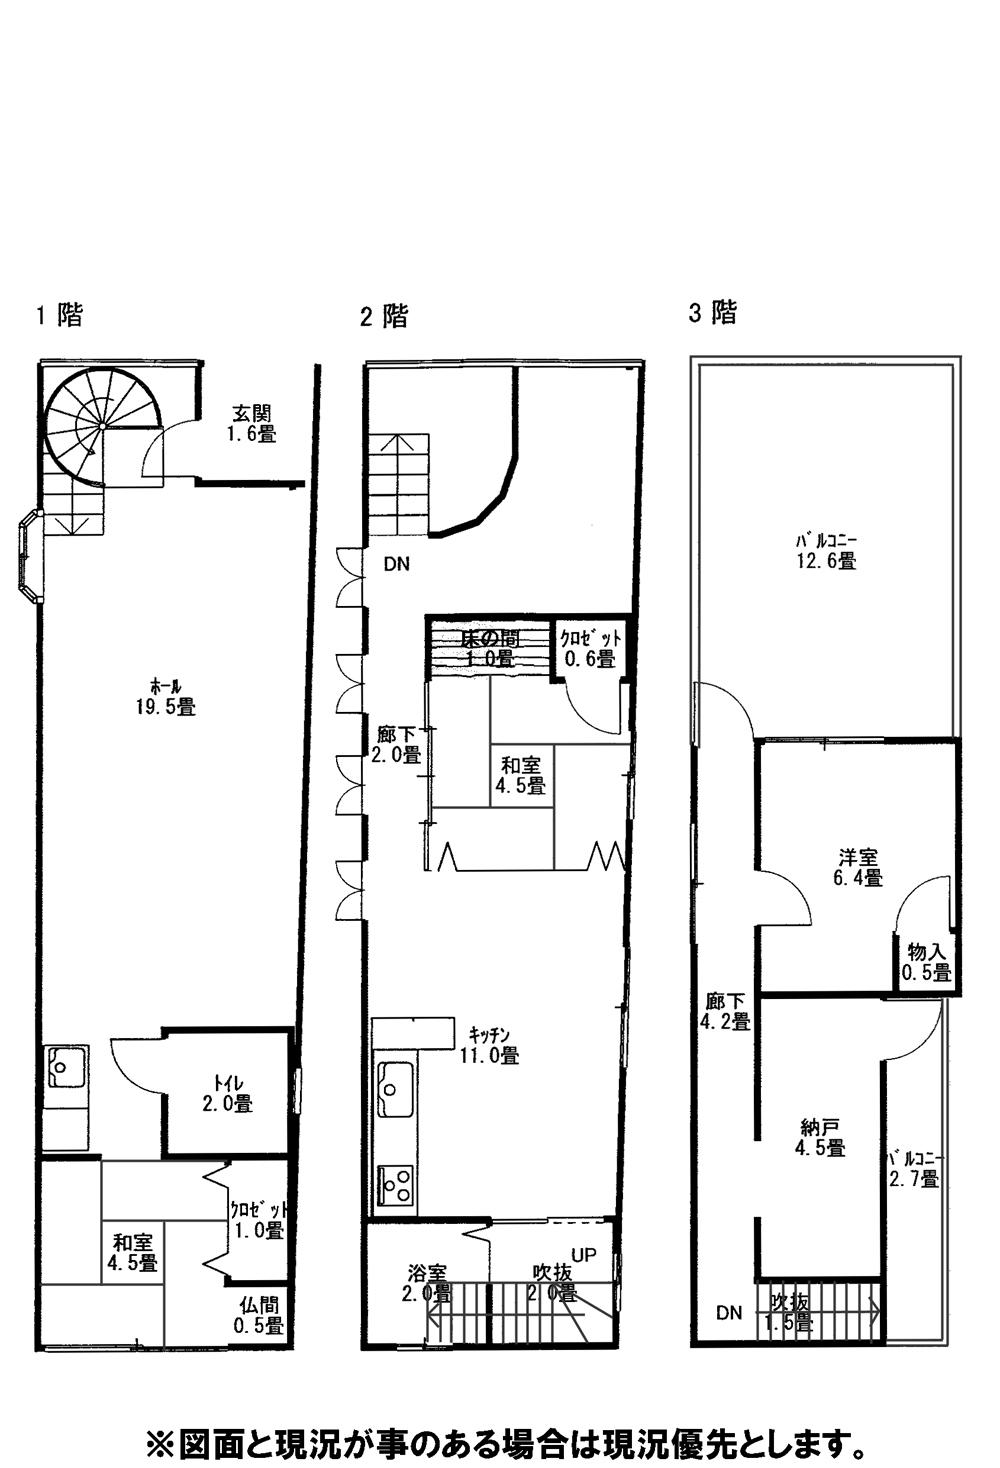 Floor plan. 8.5 million yen, 3DK + S (storeroom), Land area 80.37 sq m , Building area 122.22 sq m